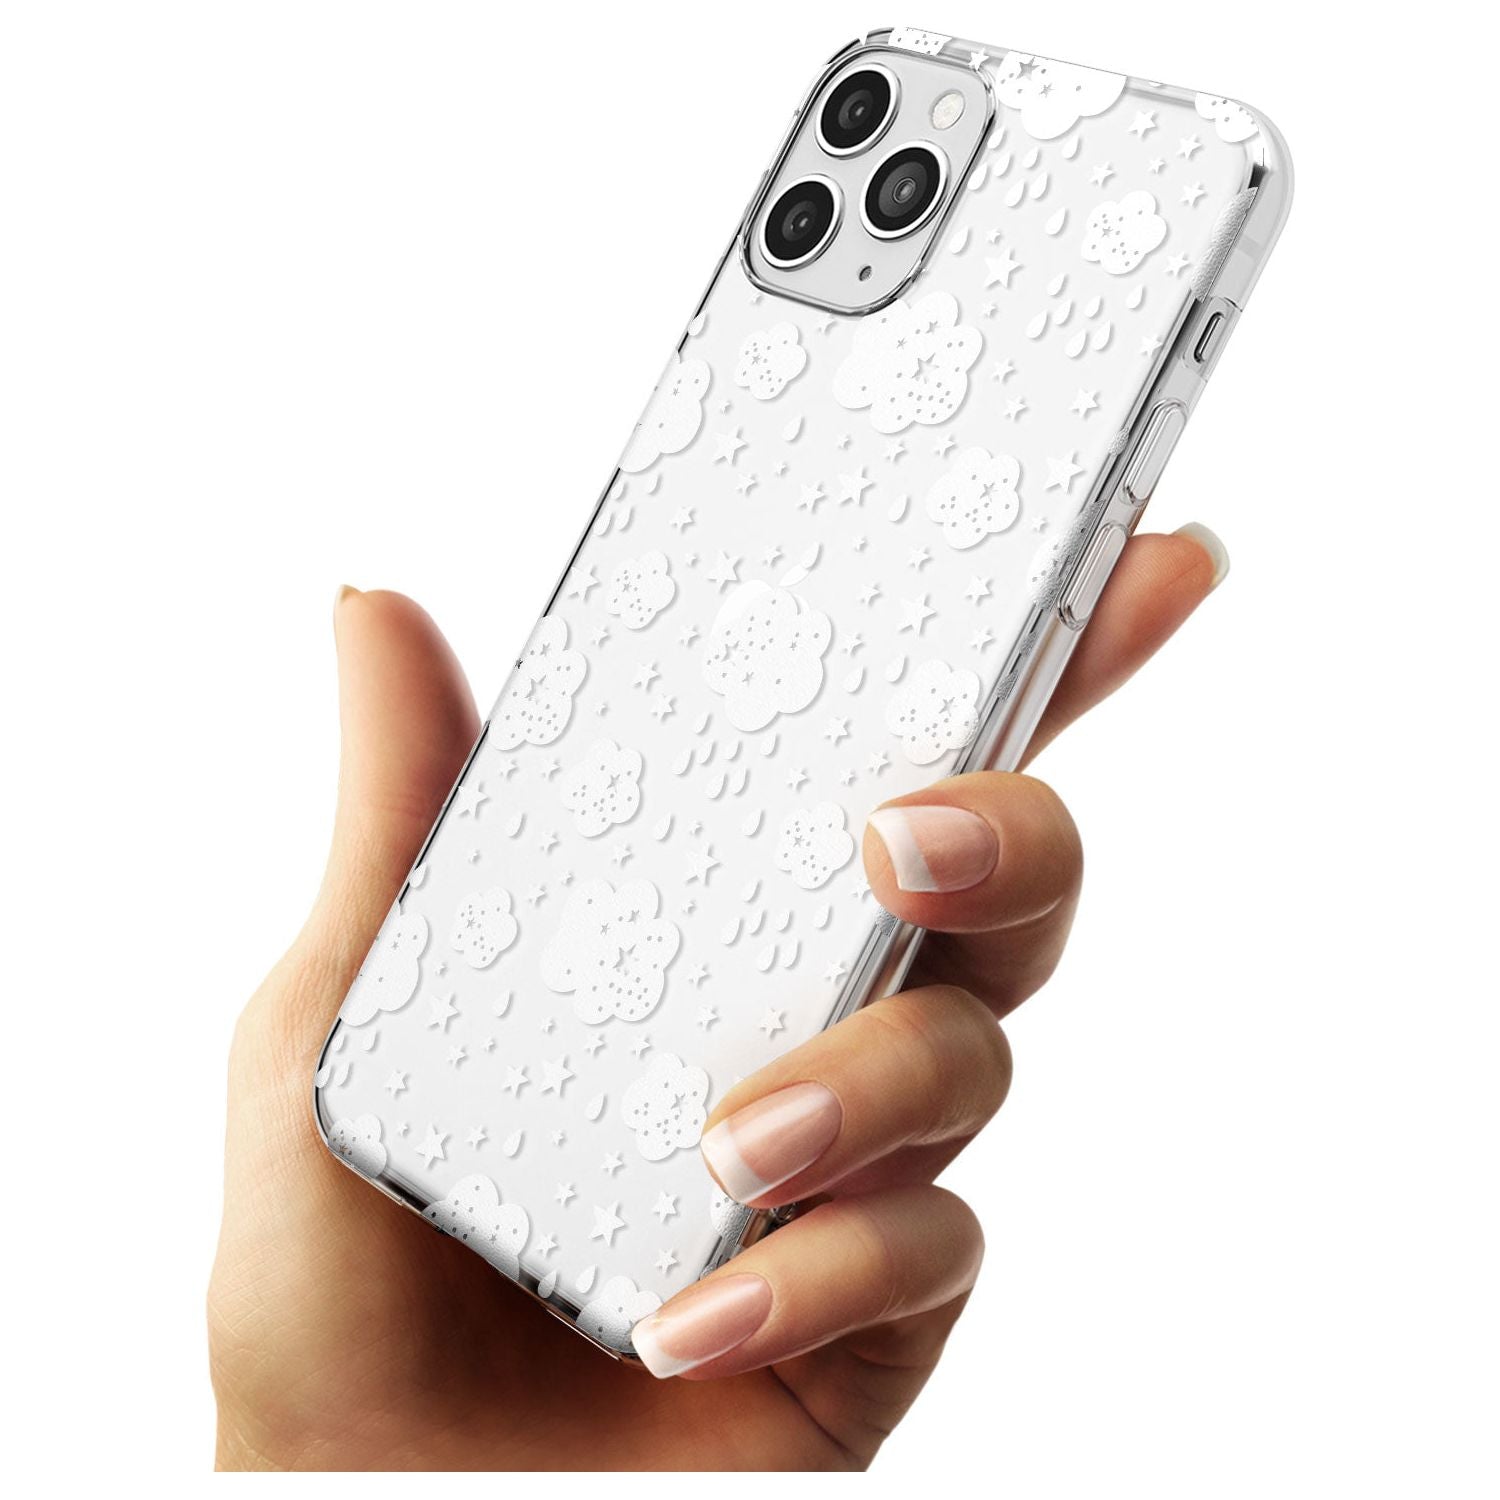 Rainy Days Slim TPU Phone Case for iPhone 11 Pro Max